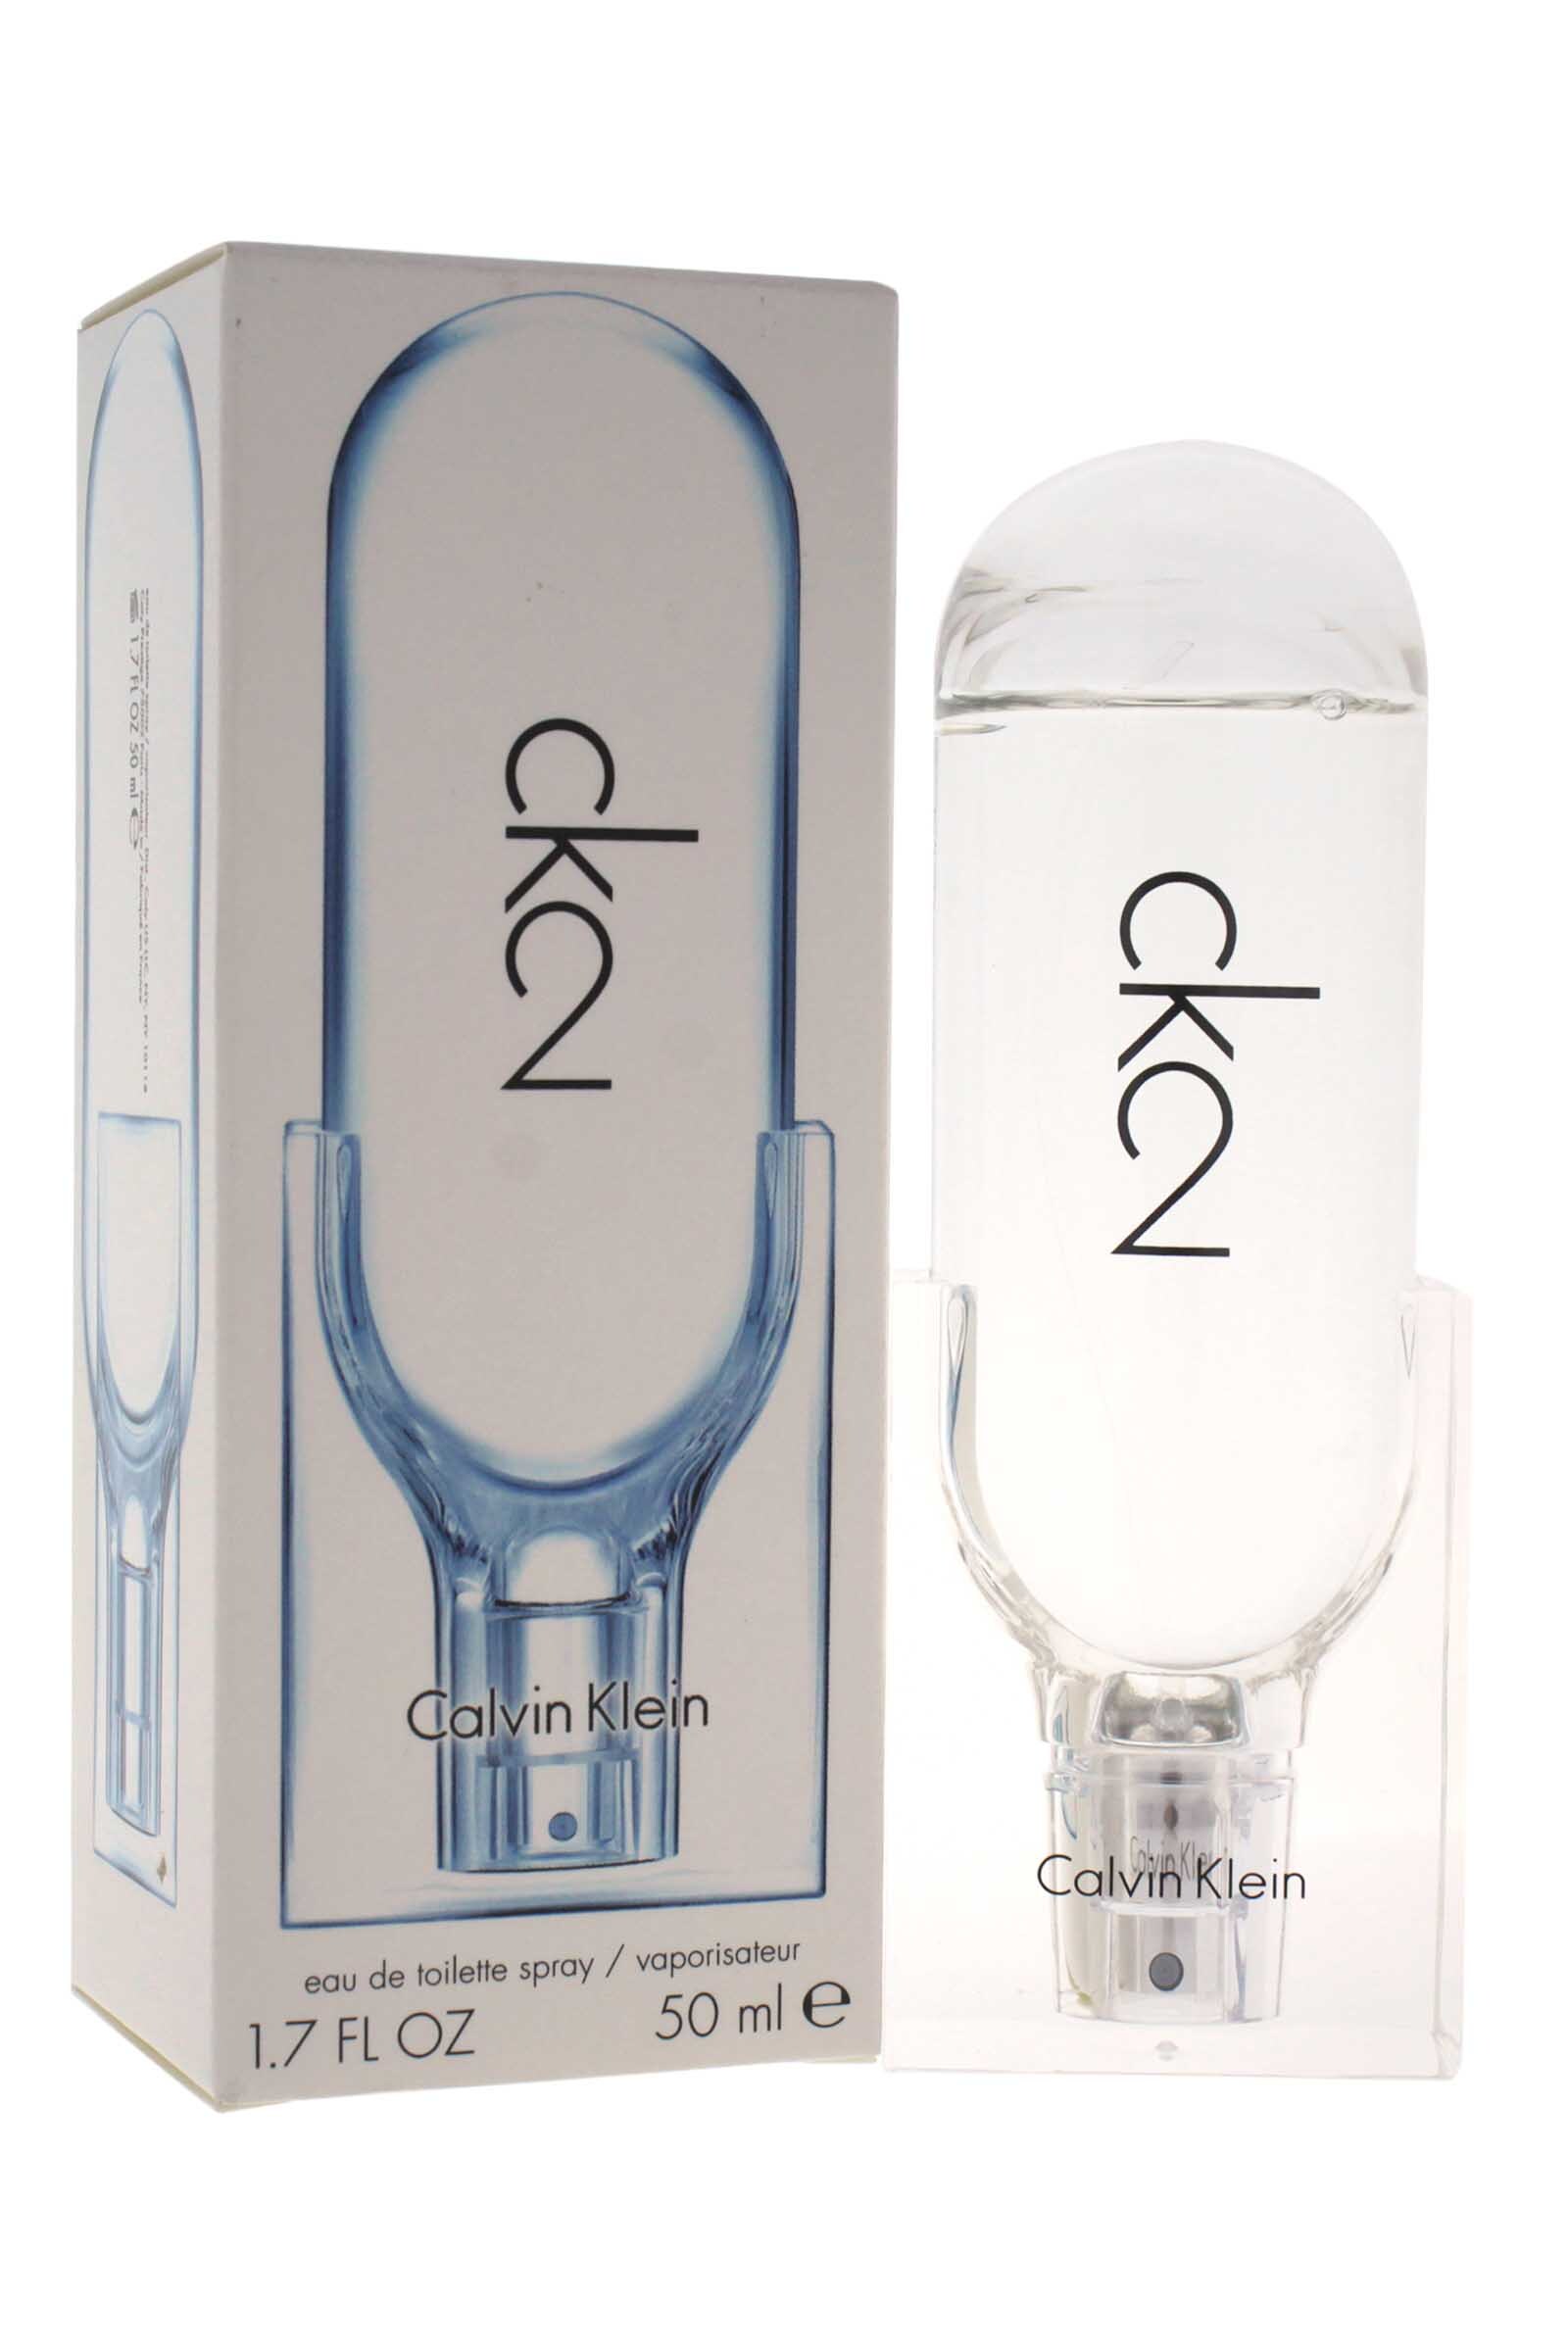 Calvin Klein CK2 Eau de Toilette Spray 50ml 3614220531830 | eBay